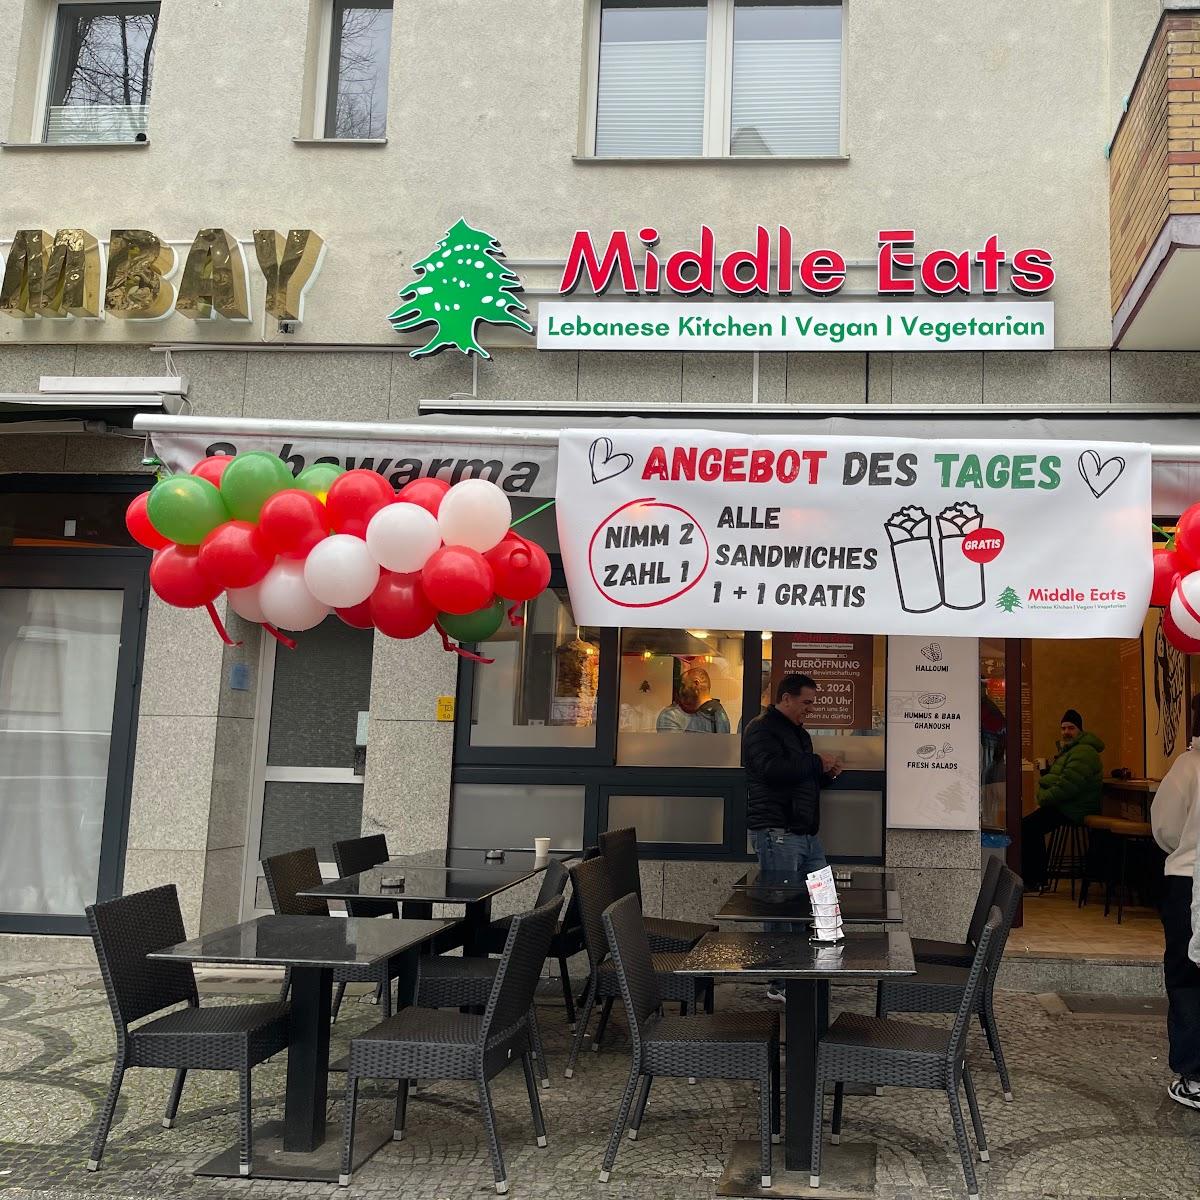 Restaurant "Middle Eats" in Berlin